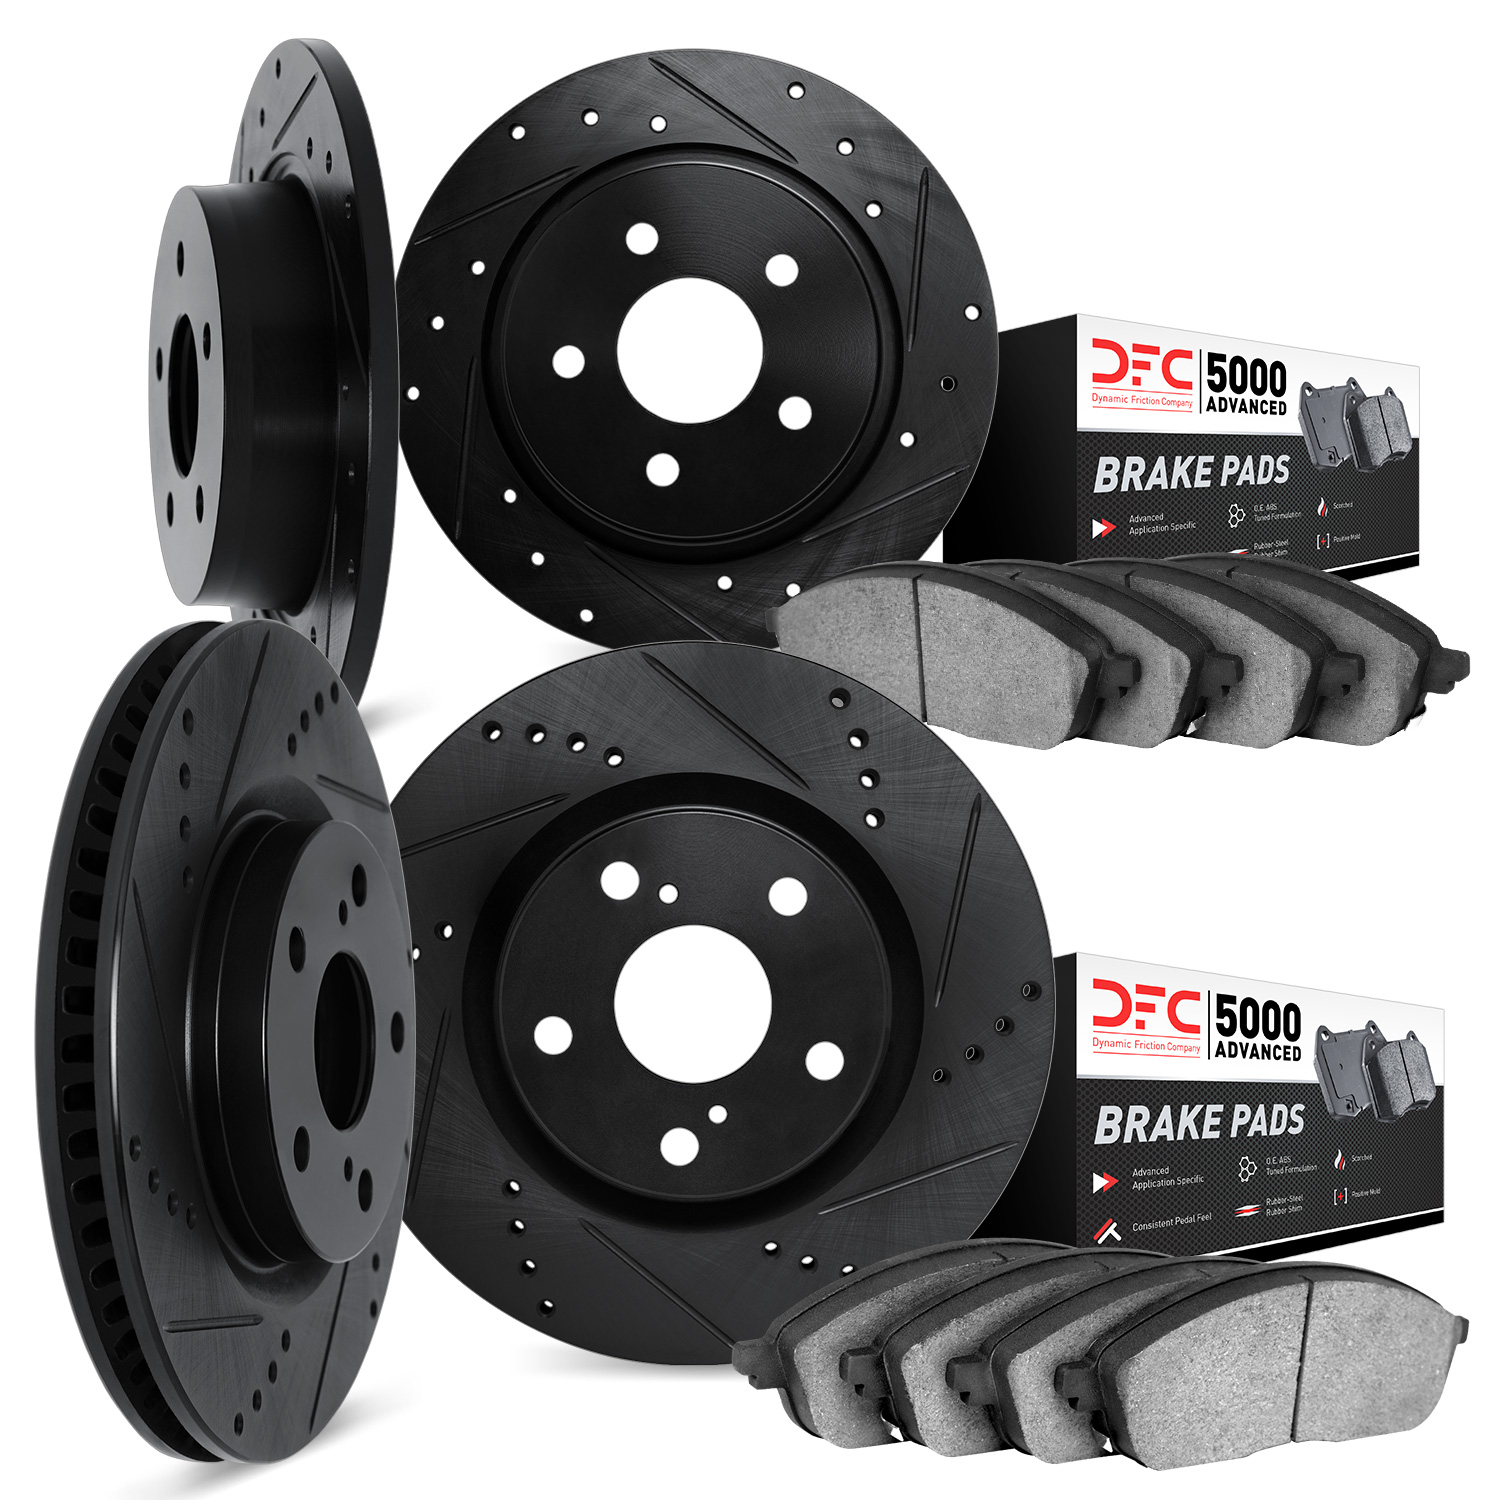 8504-80038 Drilled/Slotted Brake Rotors w/5000 Advanced Brake Pads Kit [Black], 2007-2013 Ford/Lincoln/Mercury/Mazda, Position: